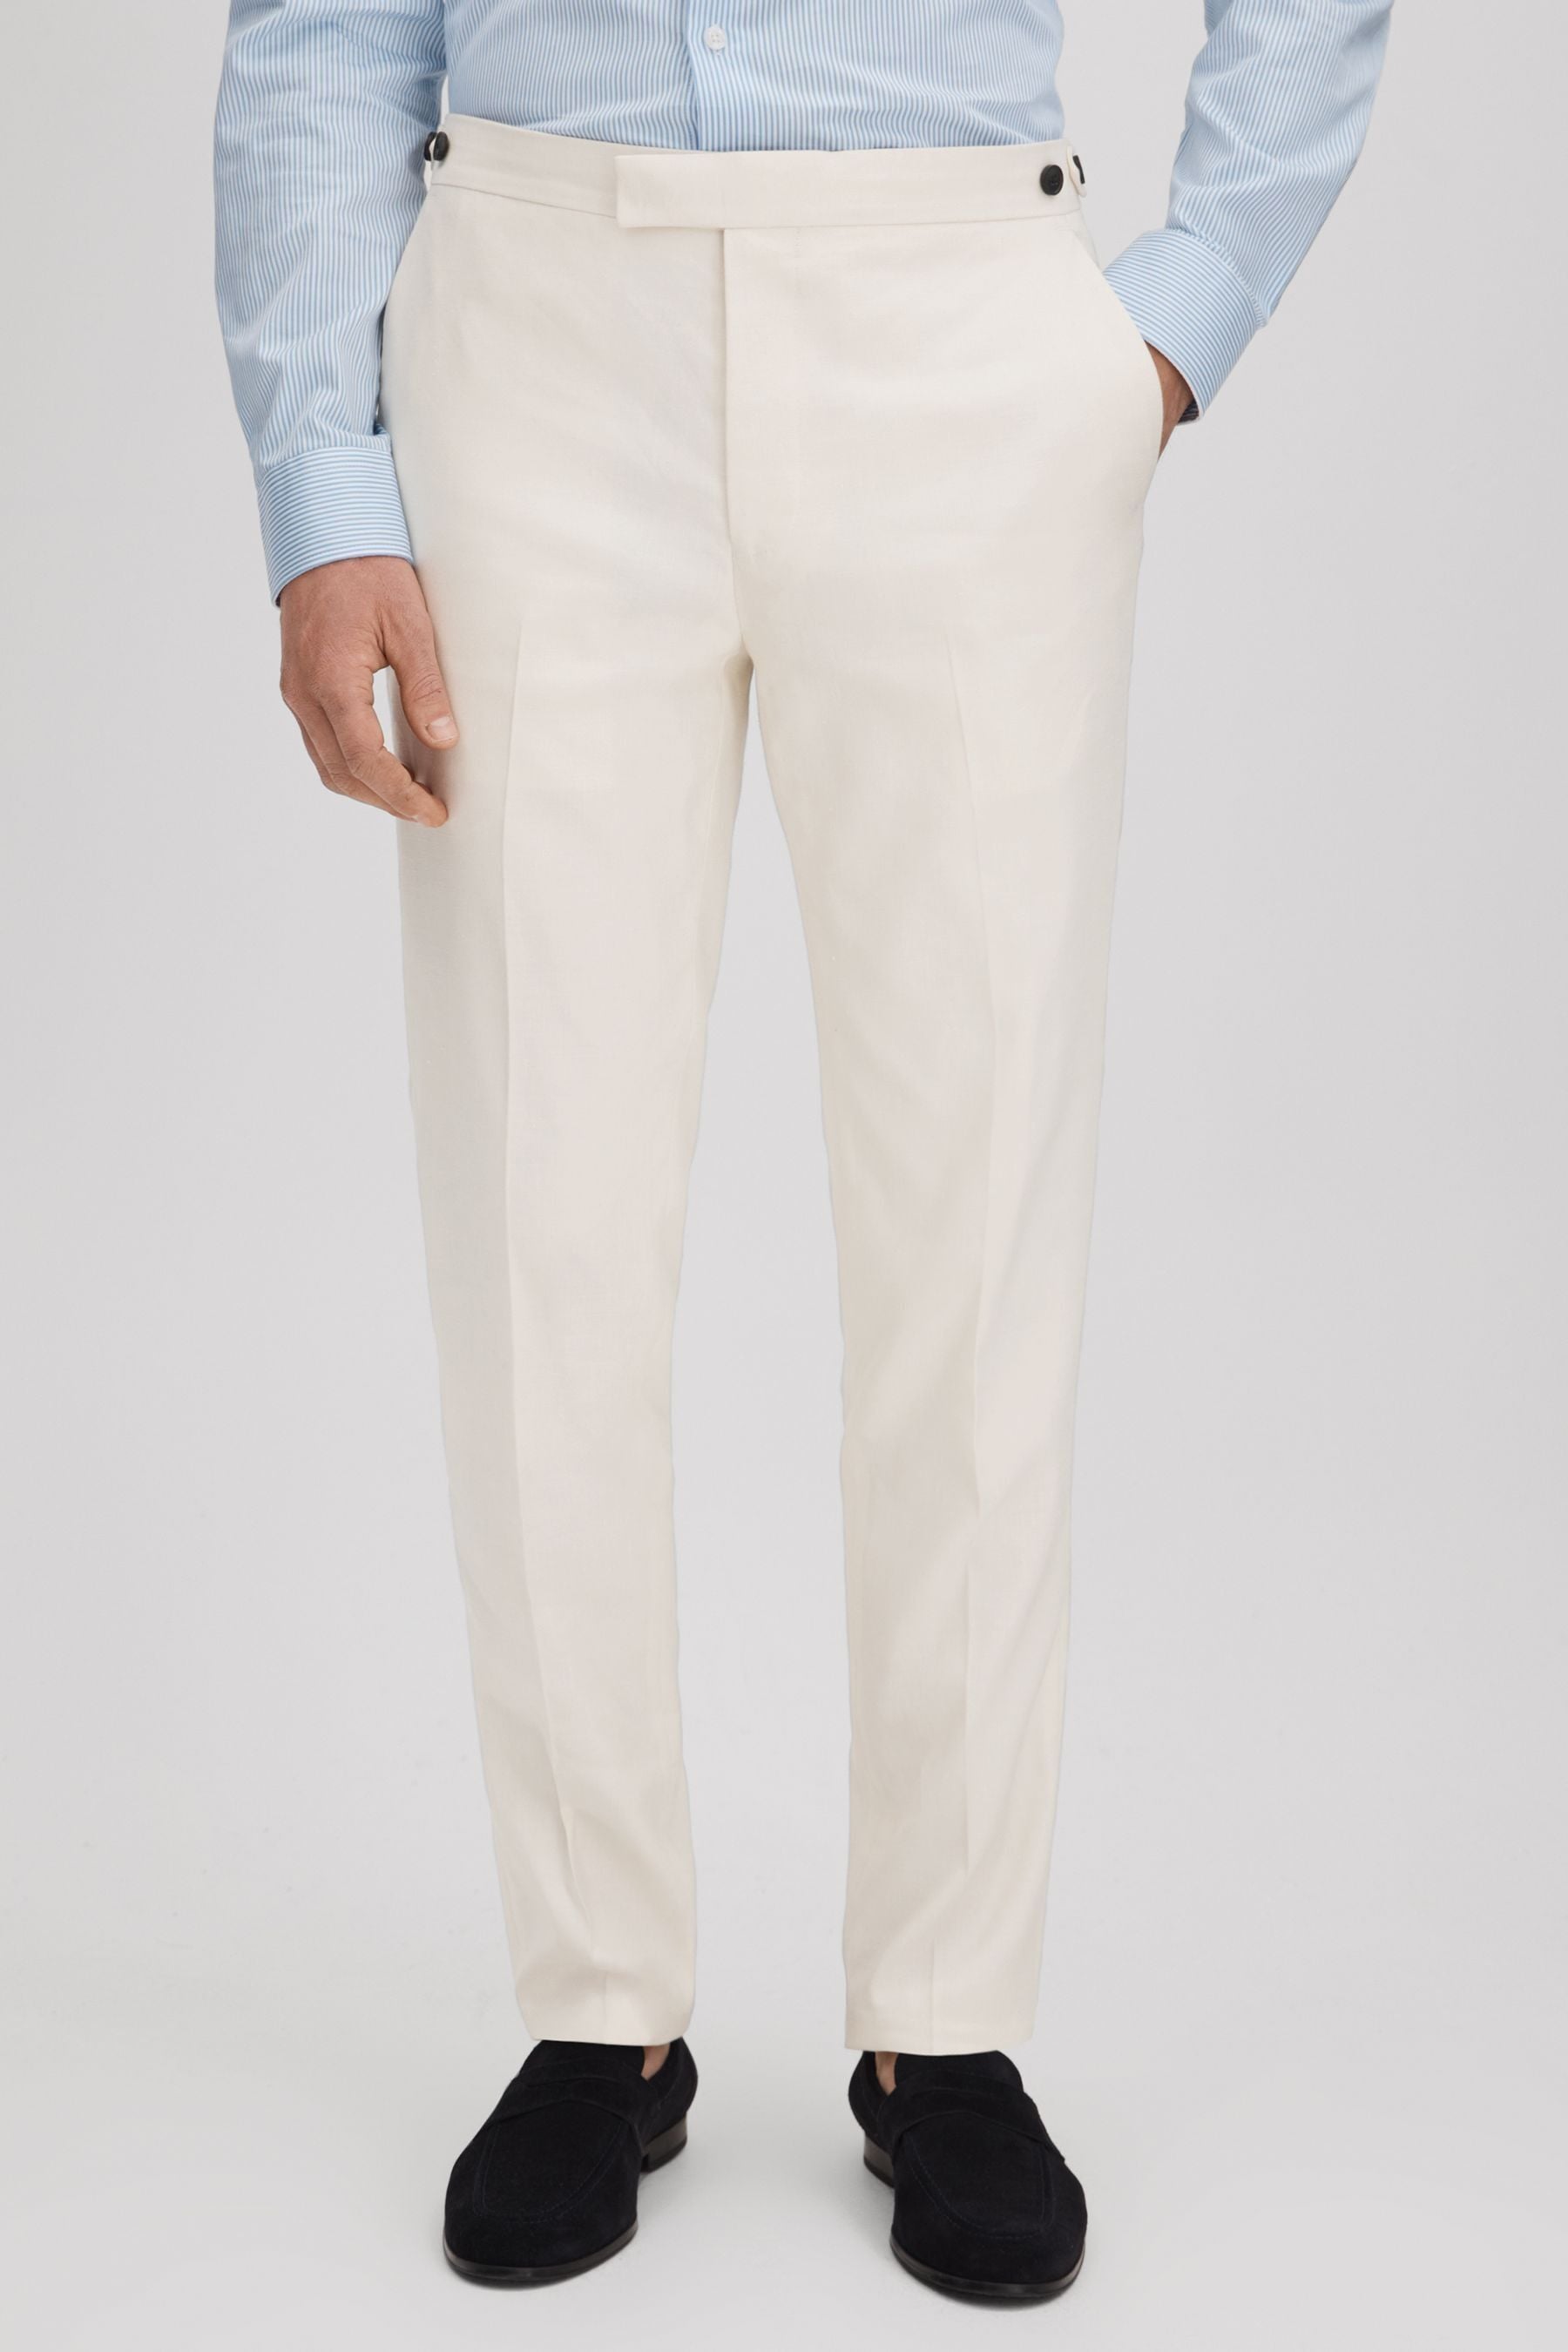 Reiss Heat - Off White Linen Blend Adjuster Trousers, 34